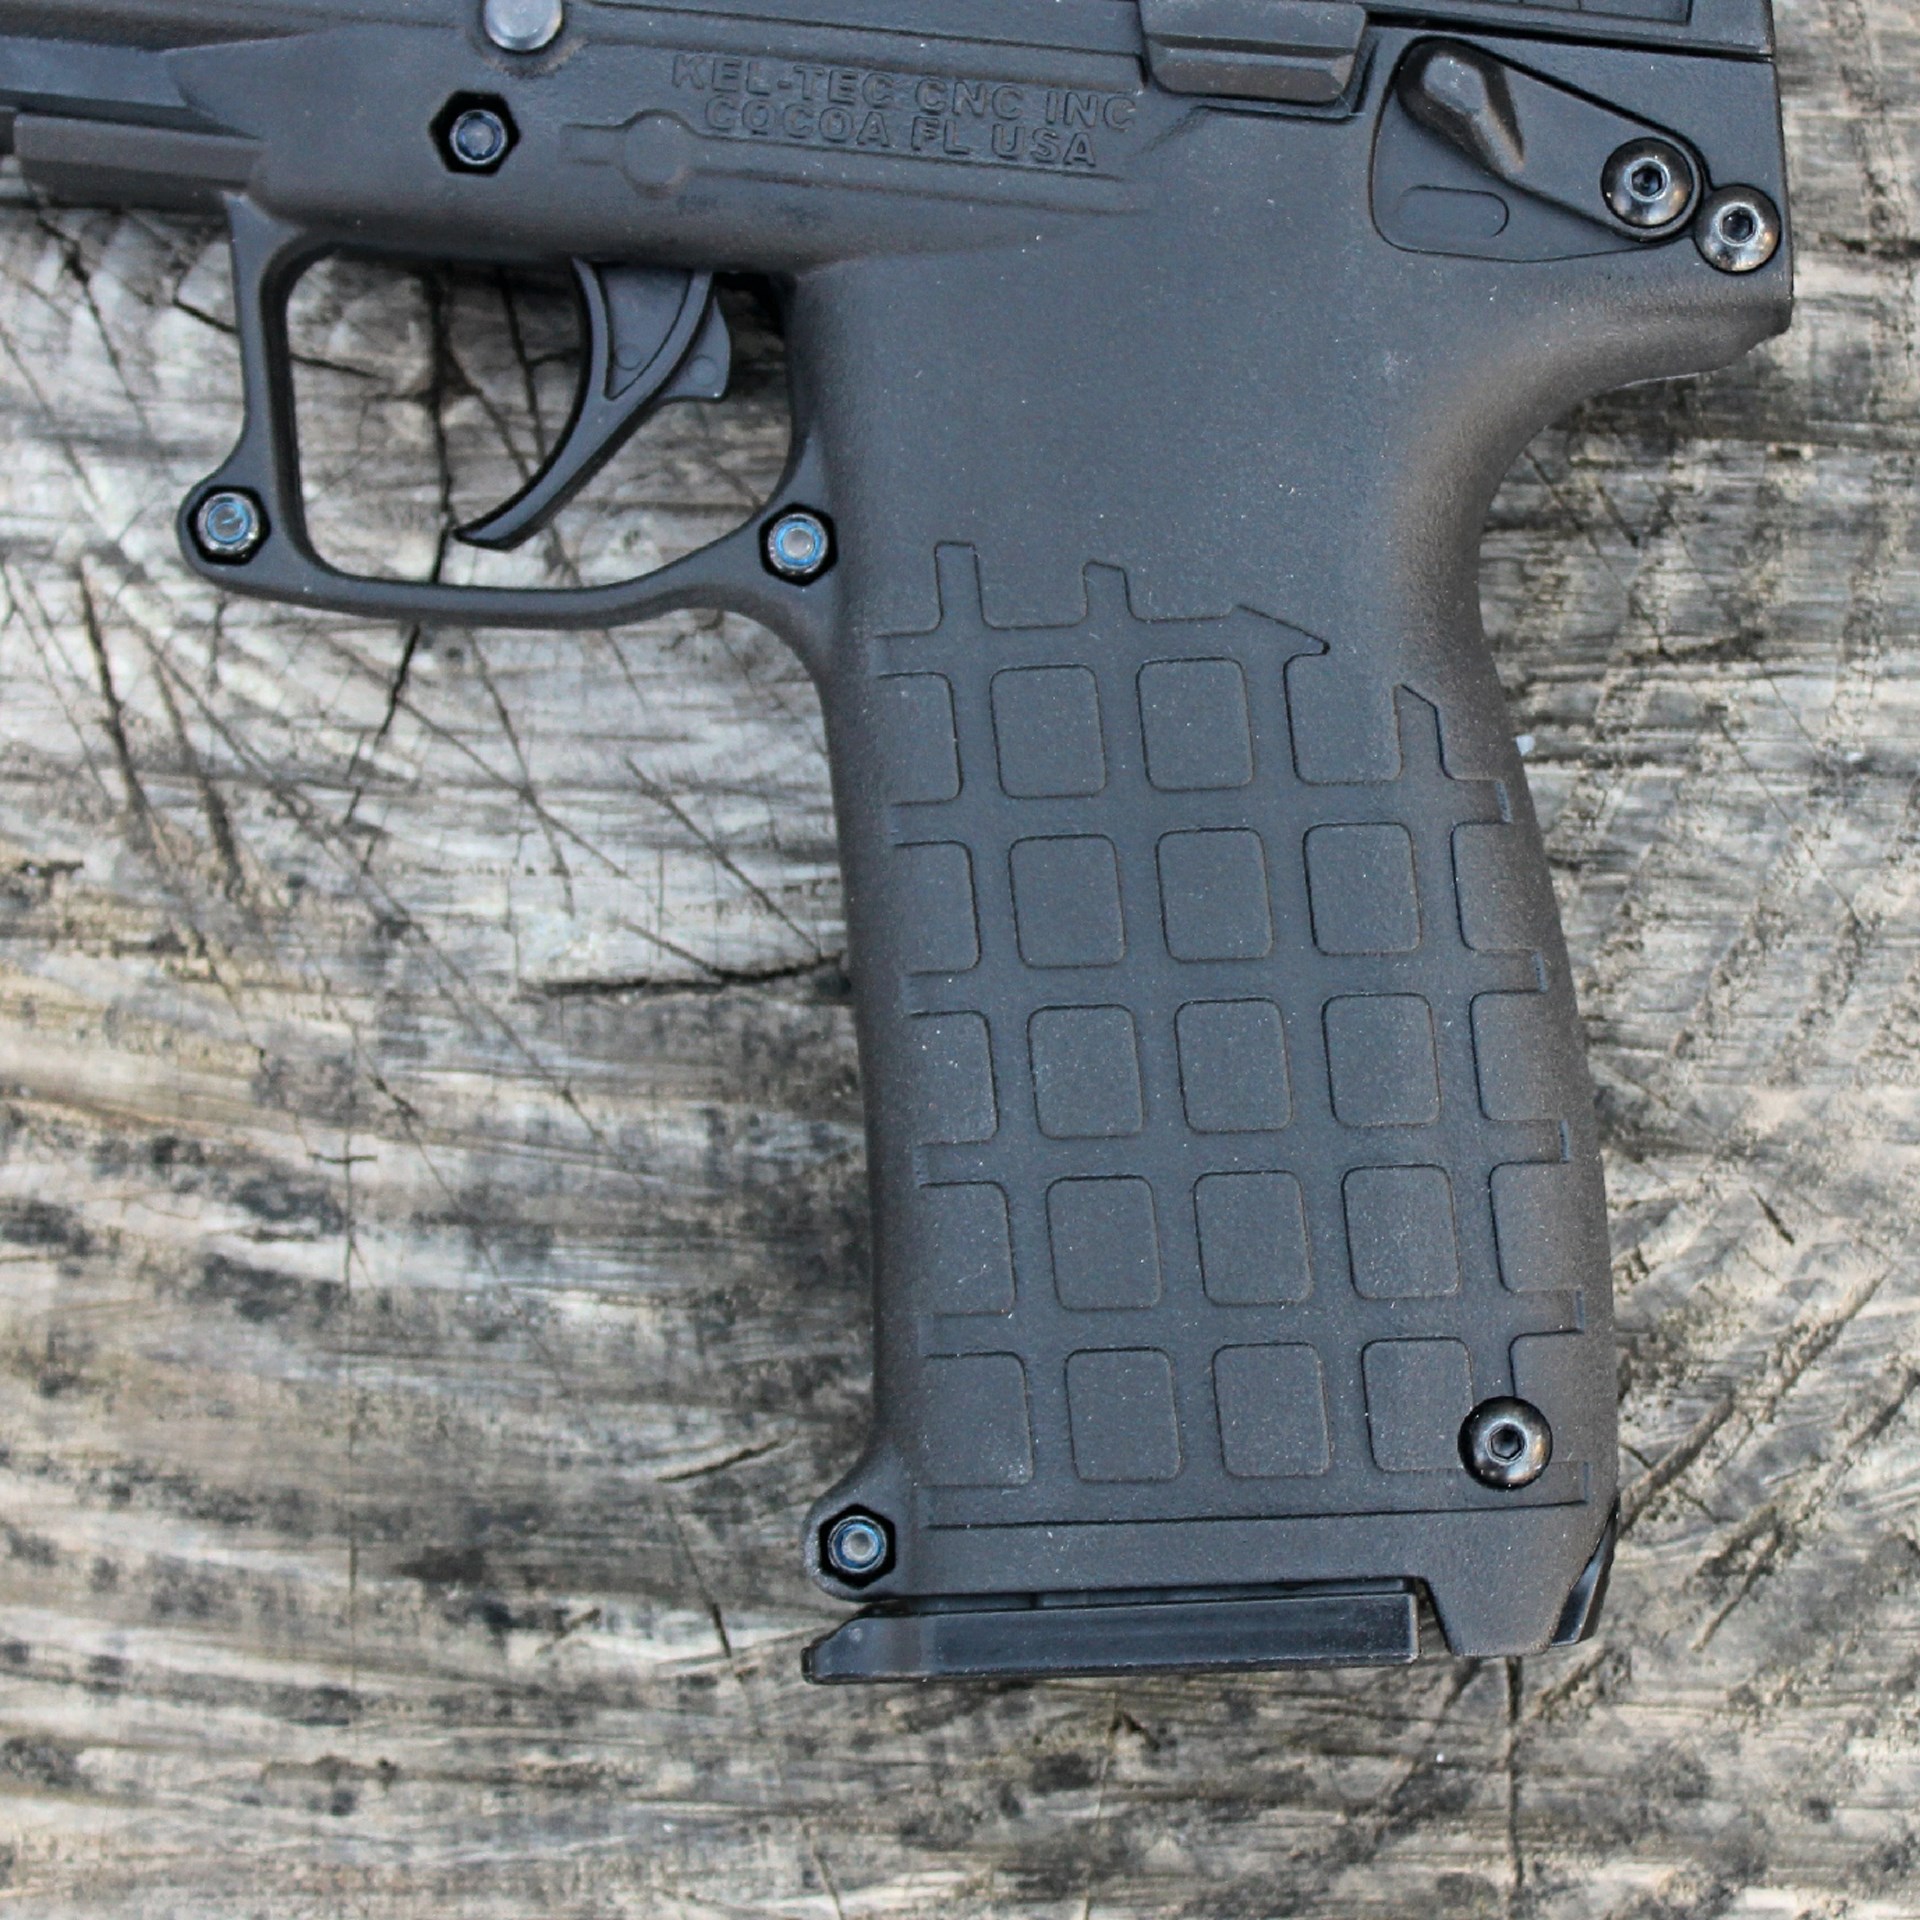 keltech pmr30 black pistol frame .22 WMR gun left-side view cropped closeup shown on wood log